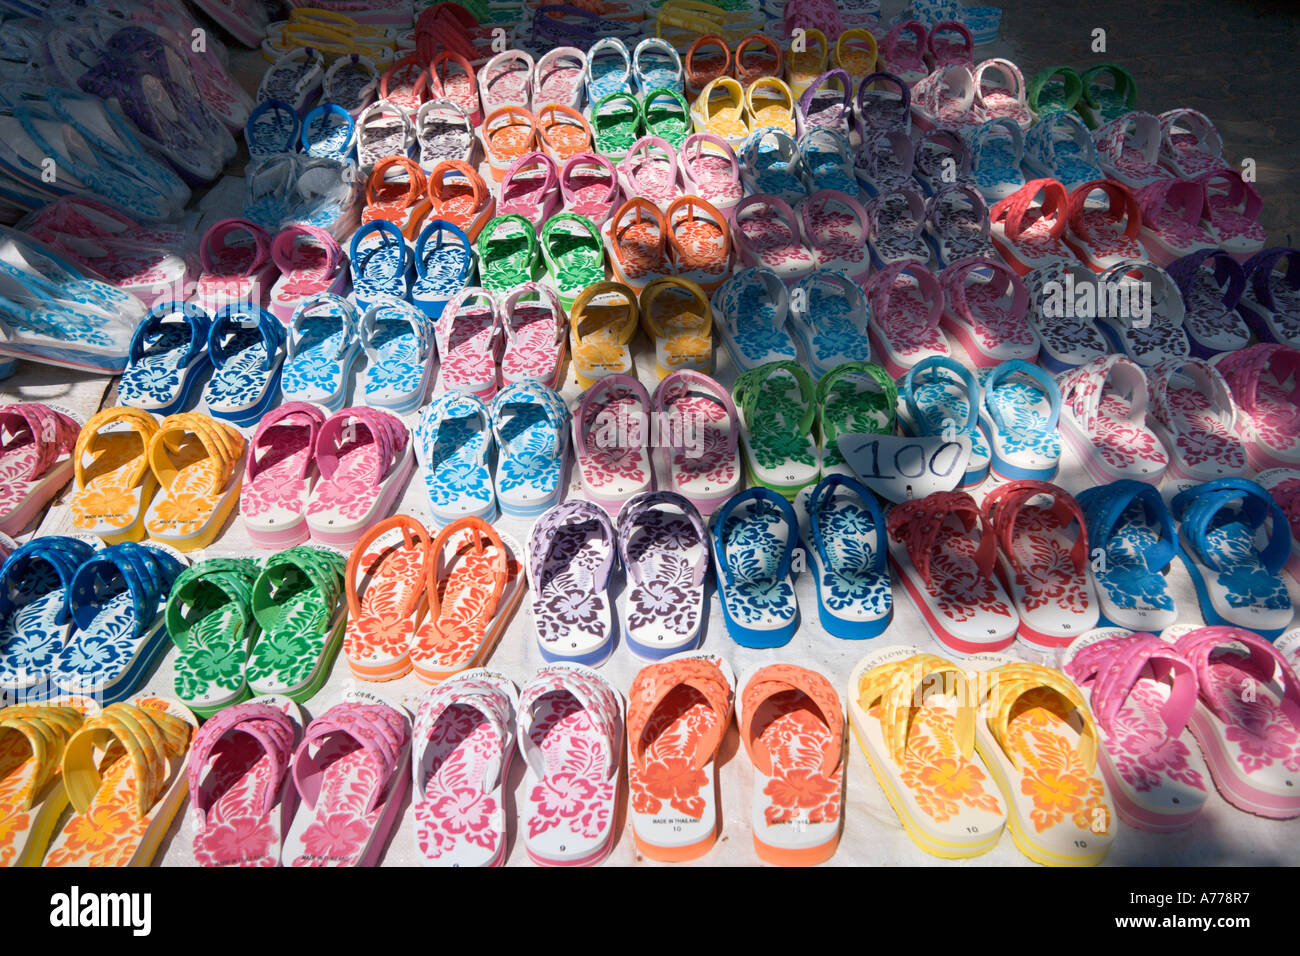 Le scarpe per la vendita, Wat Chalong tempio buddista, Phuket, Tailandia Foto Stock